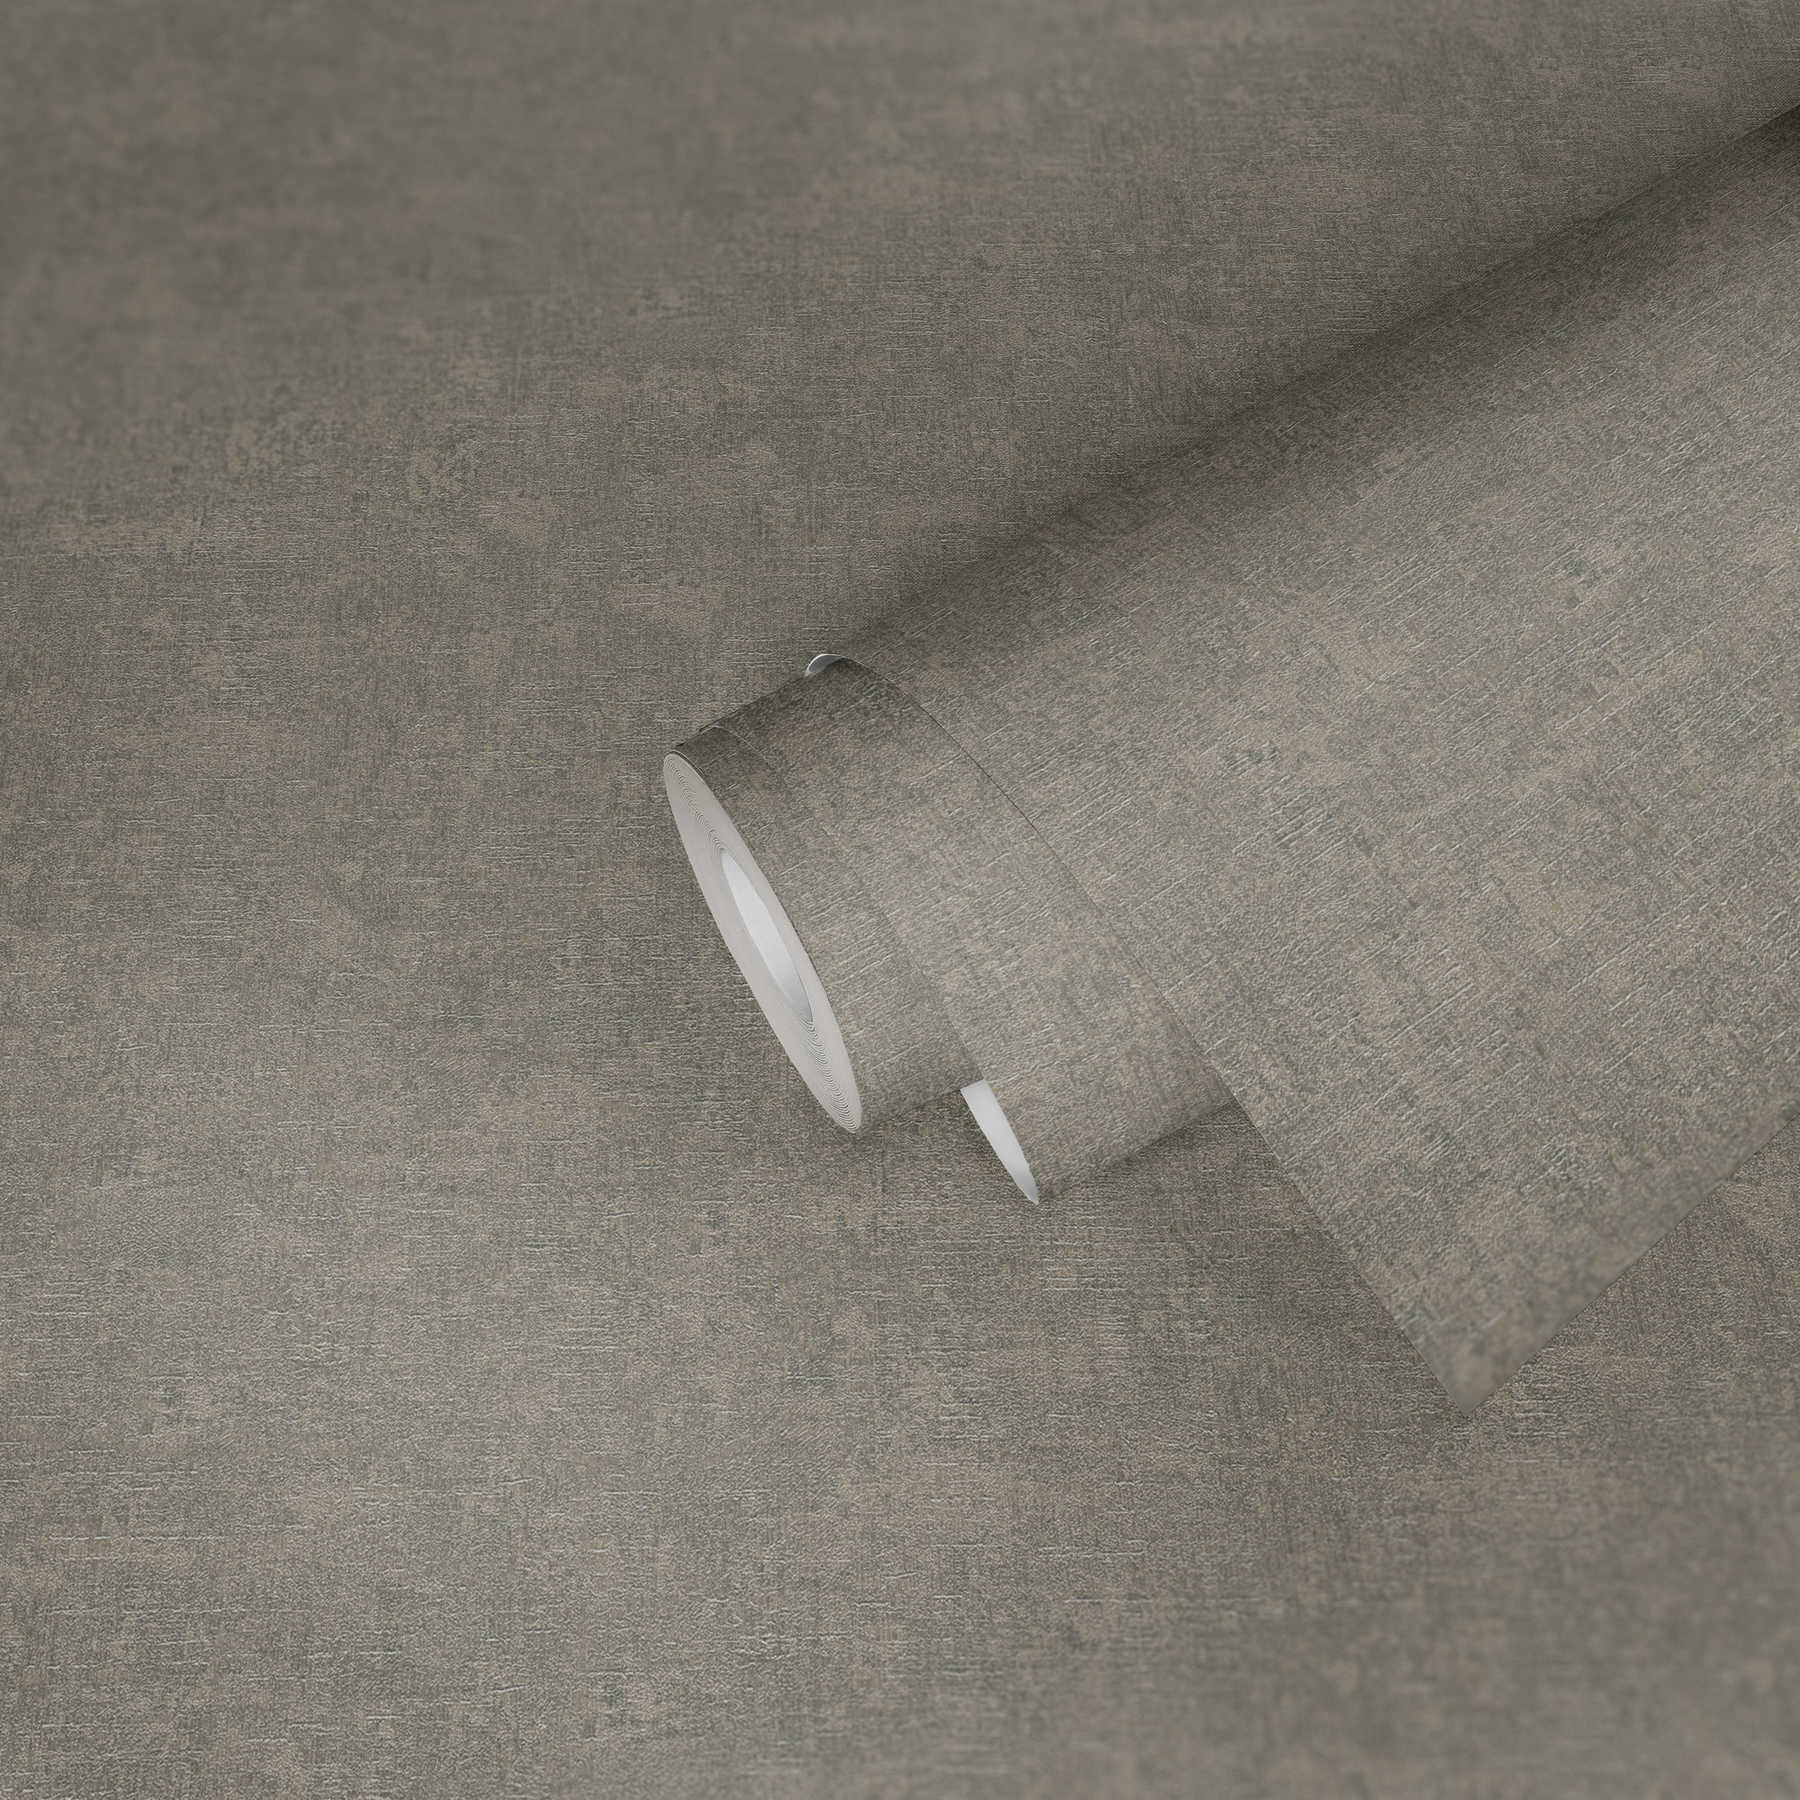             Silver grey plain wallpaper with concrete plaster look - beige, grey
        